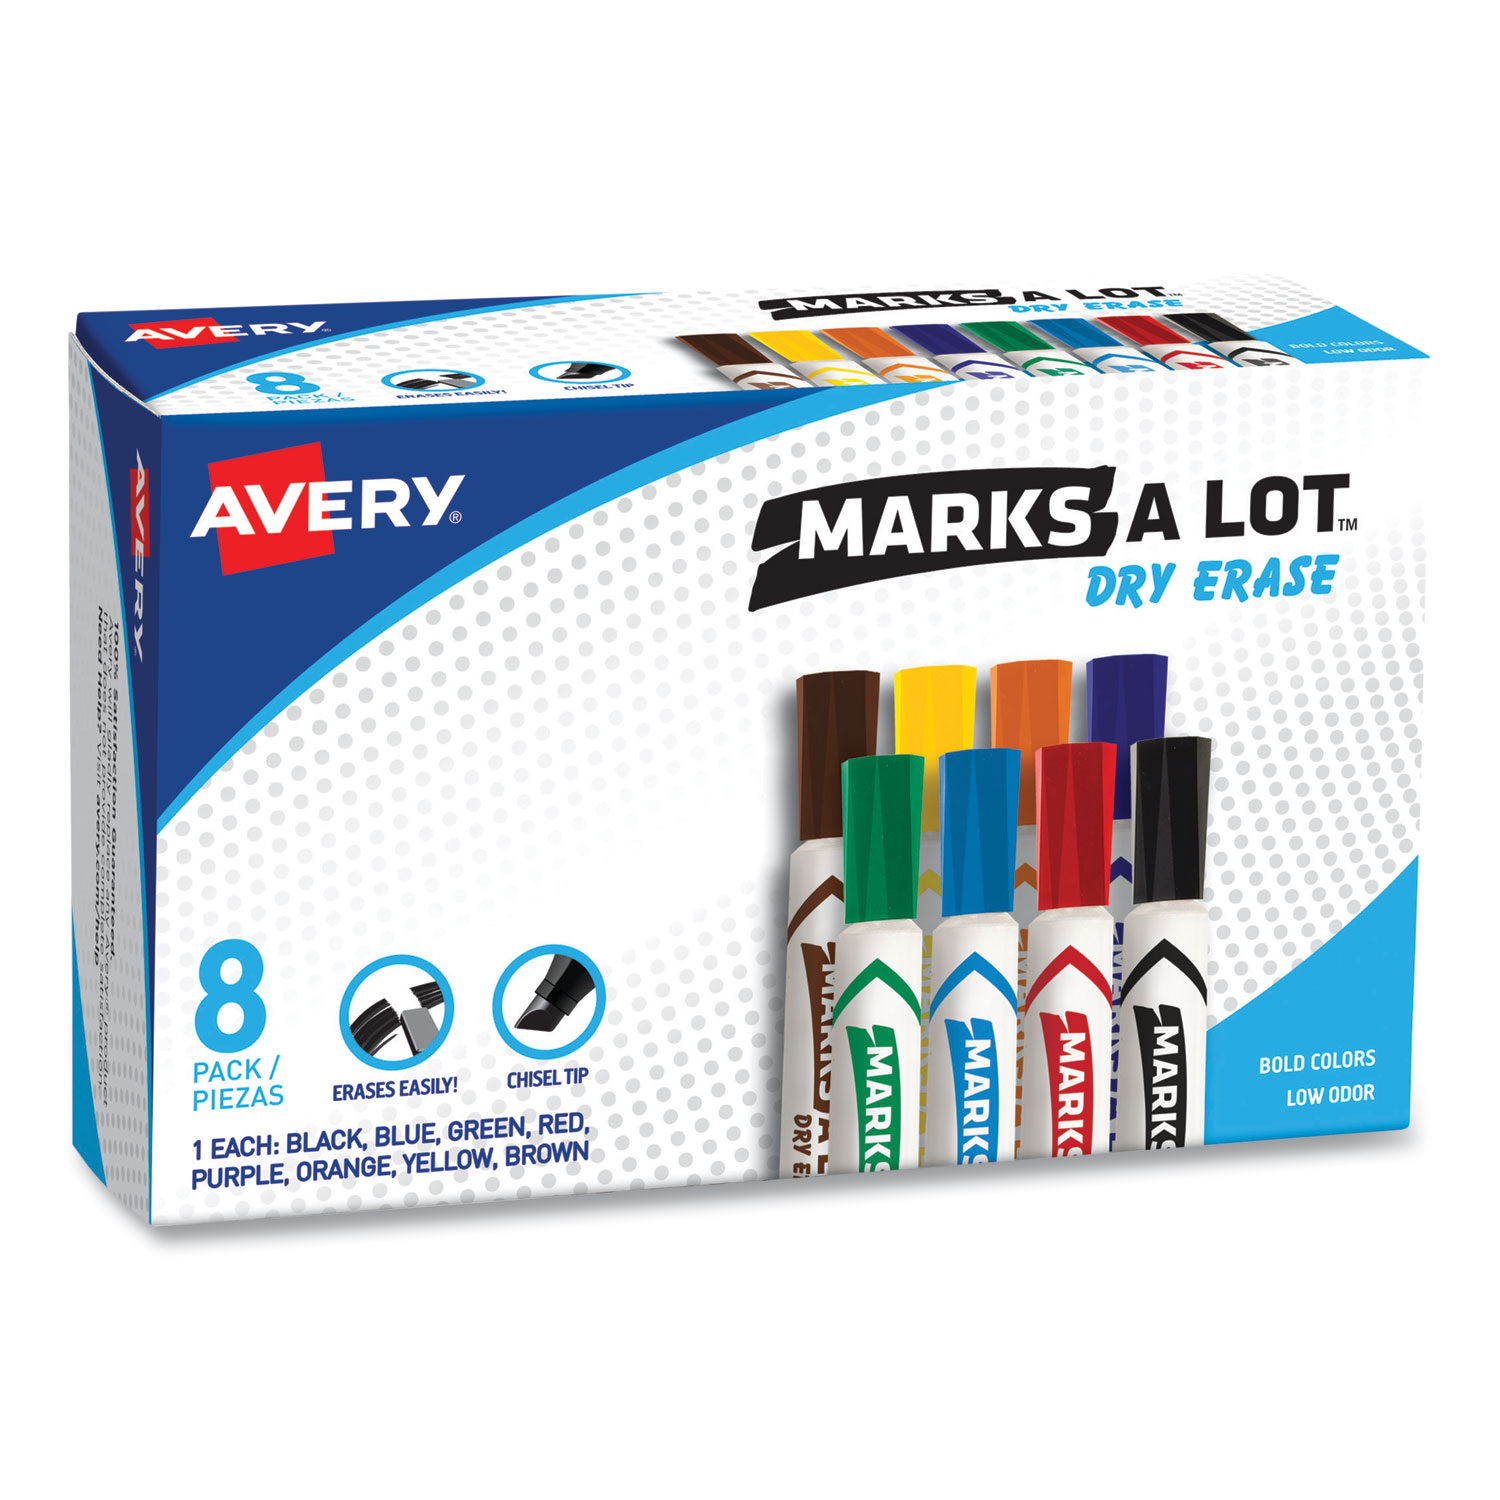 School Smart Dry Erase Markers, Bullet Tip, Low Odor, Assorted Colors, Pack of 4